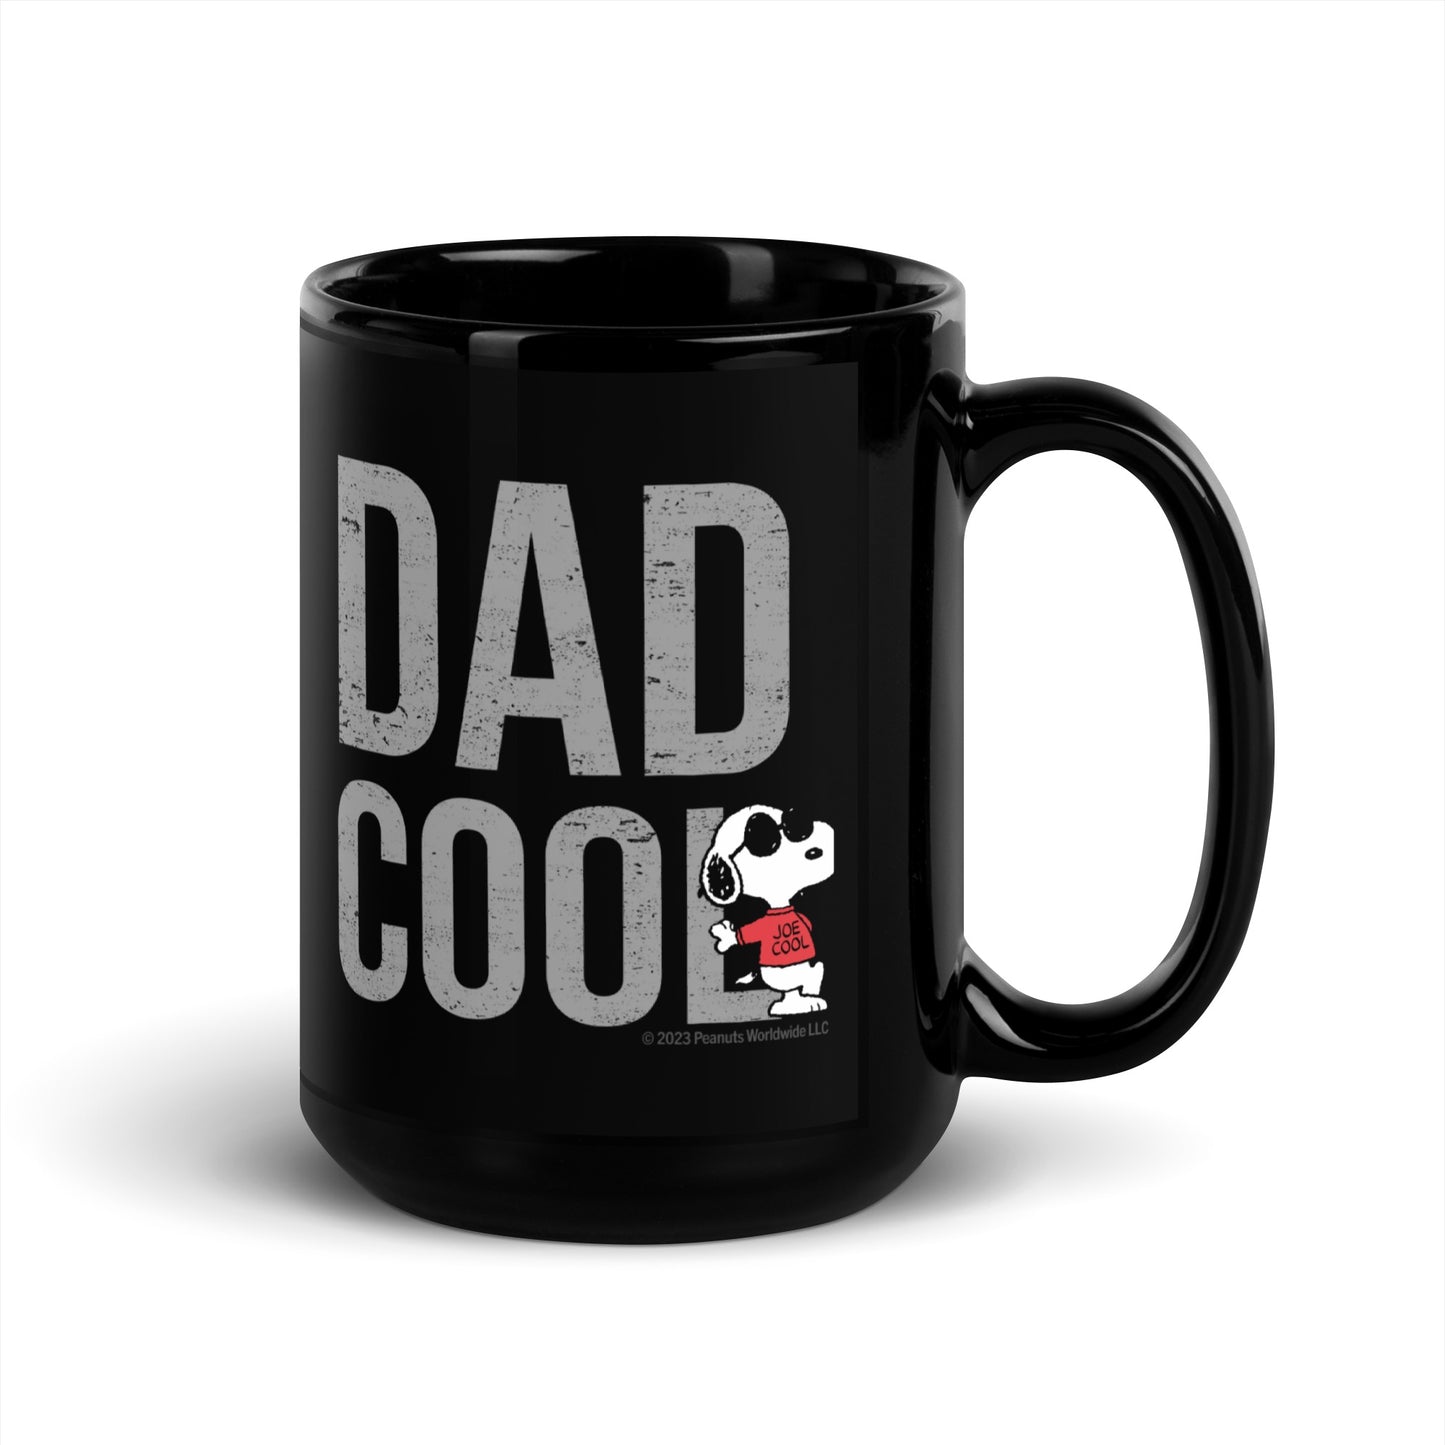 Snoopy Joe Cool Dad Cool Black Mug